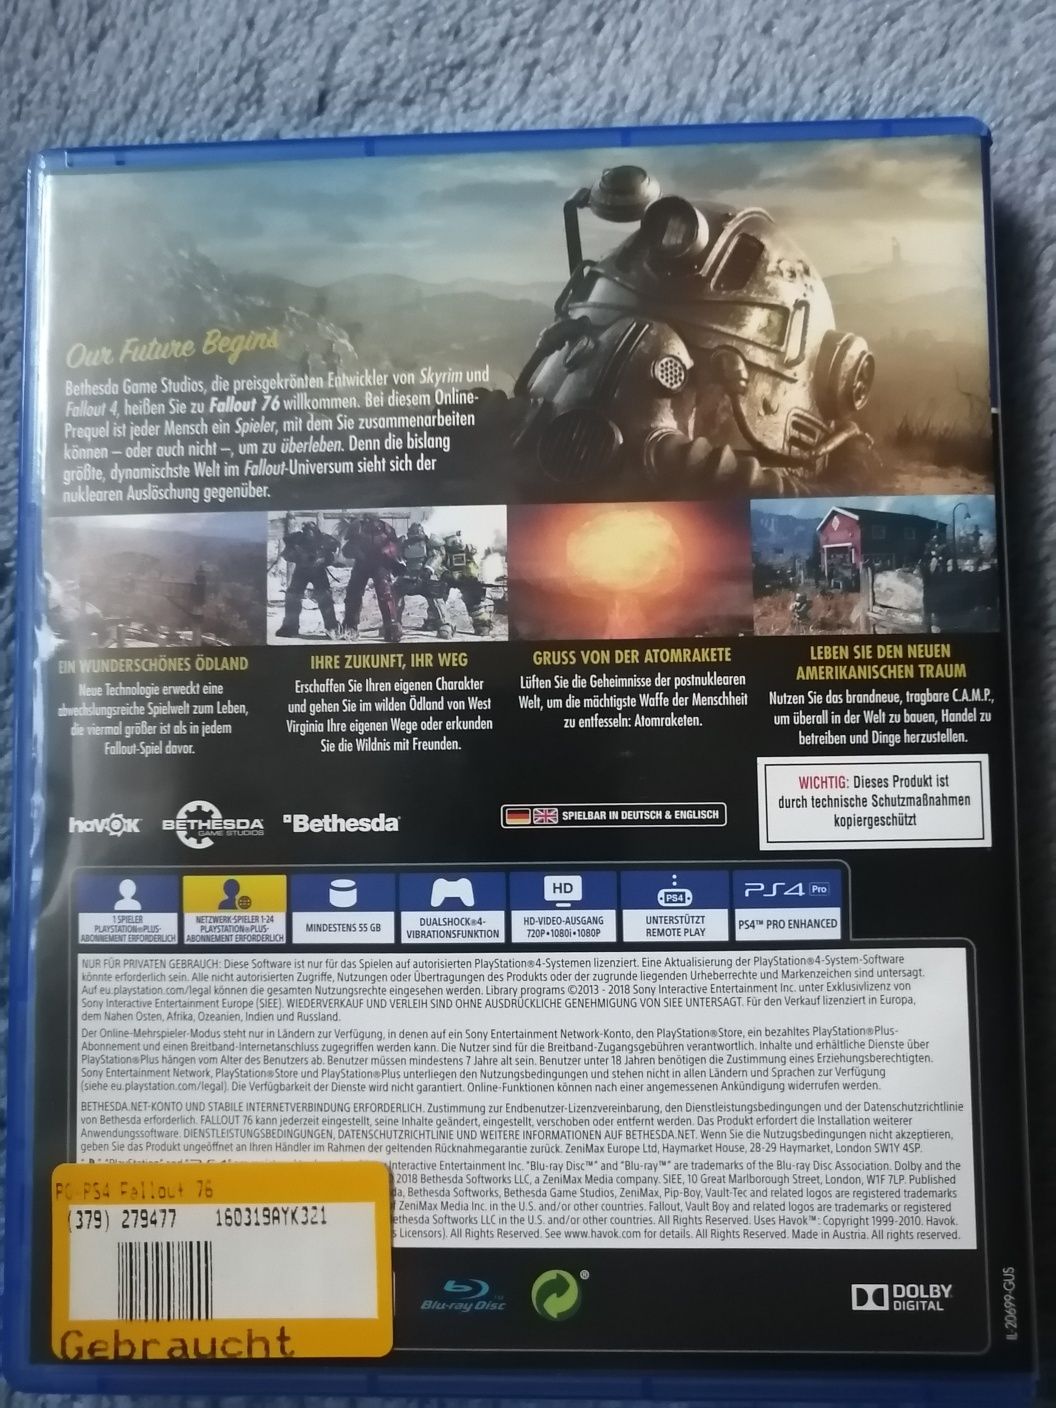 Fallout 76 для PlayStation 4